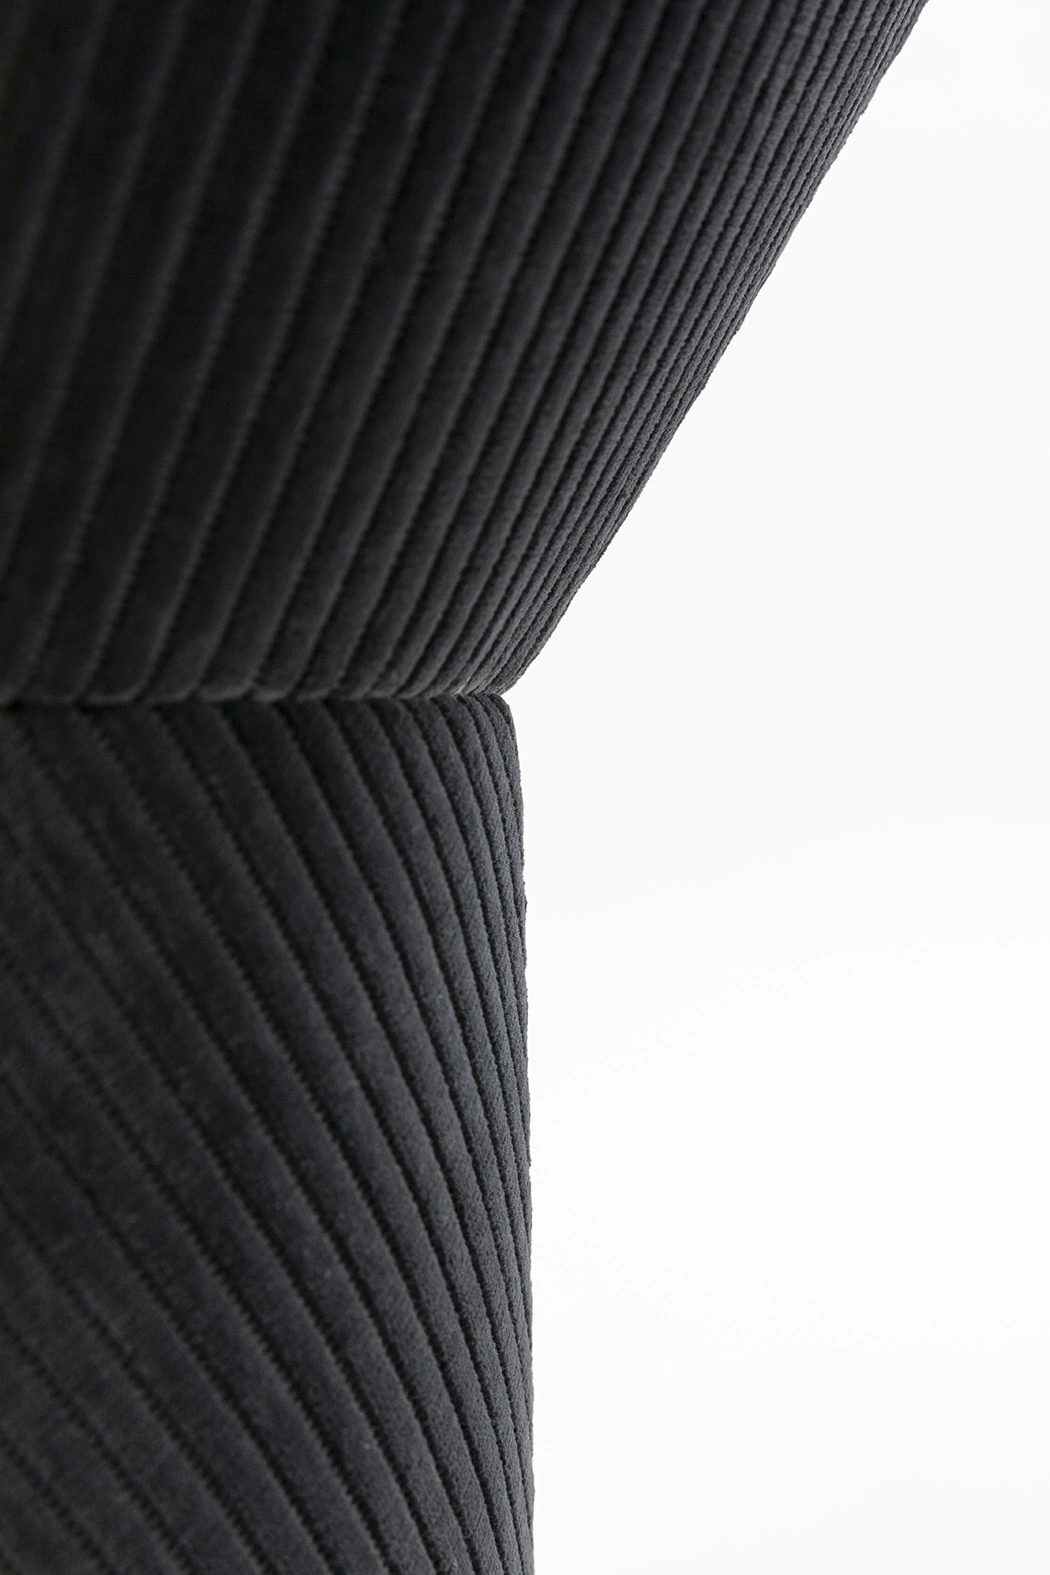 Gemini stool - Jean-Baptiste Fastrez - Stool - Galerie kreo